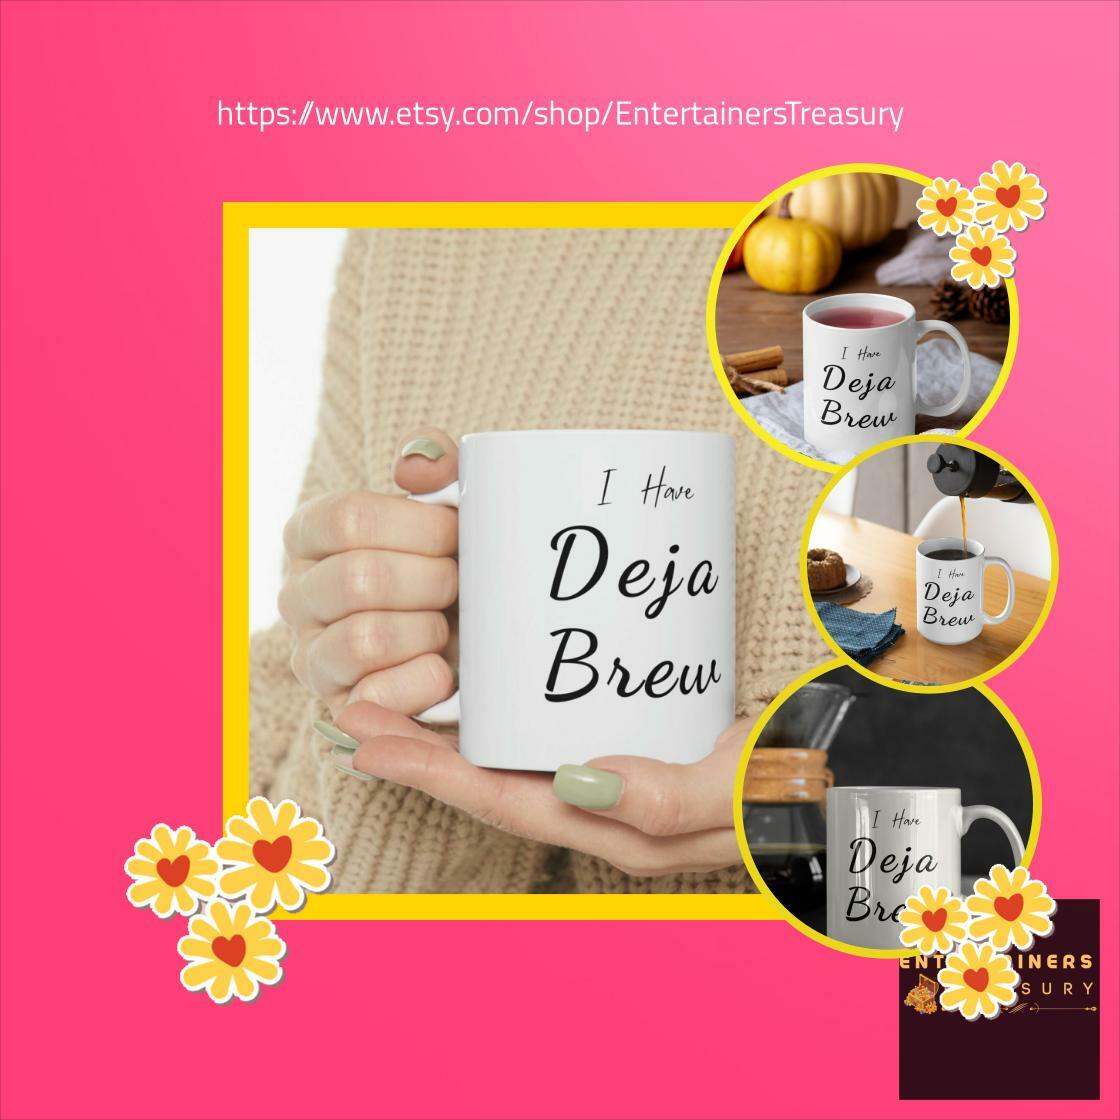 Just in! This unique I Have Deja Brew | Ceramic Mug 11 oz | Funny Coffee Mug | Gift For Her Him | Coffee Lover Gift | Gift For Mom Dad | Funny Work Mug for $15.00. 
etsy.com/listing/146466…
#DejaBrew #FunnyCoffeeMug